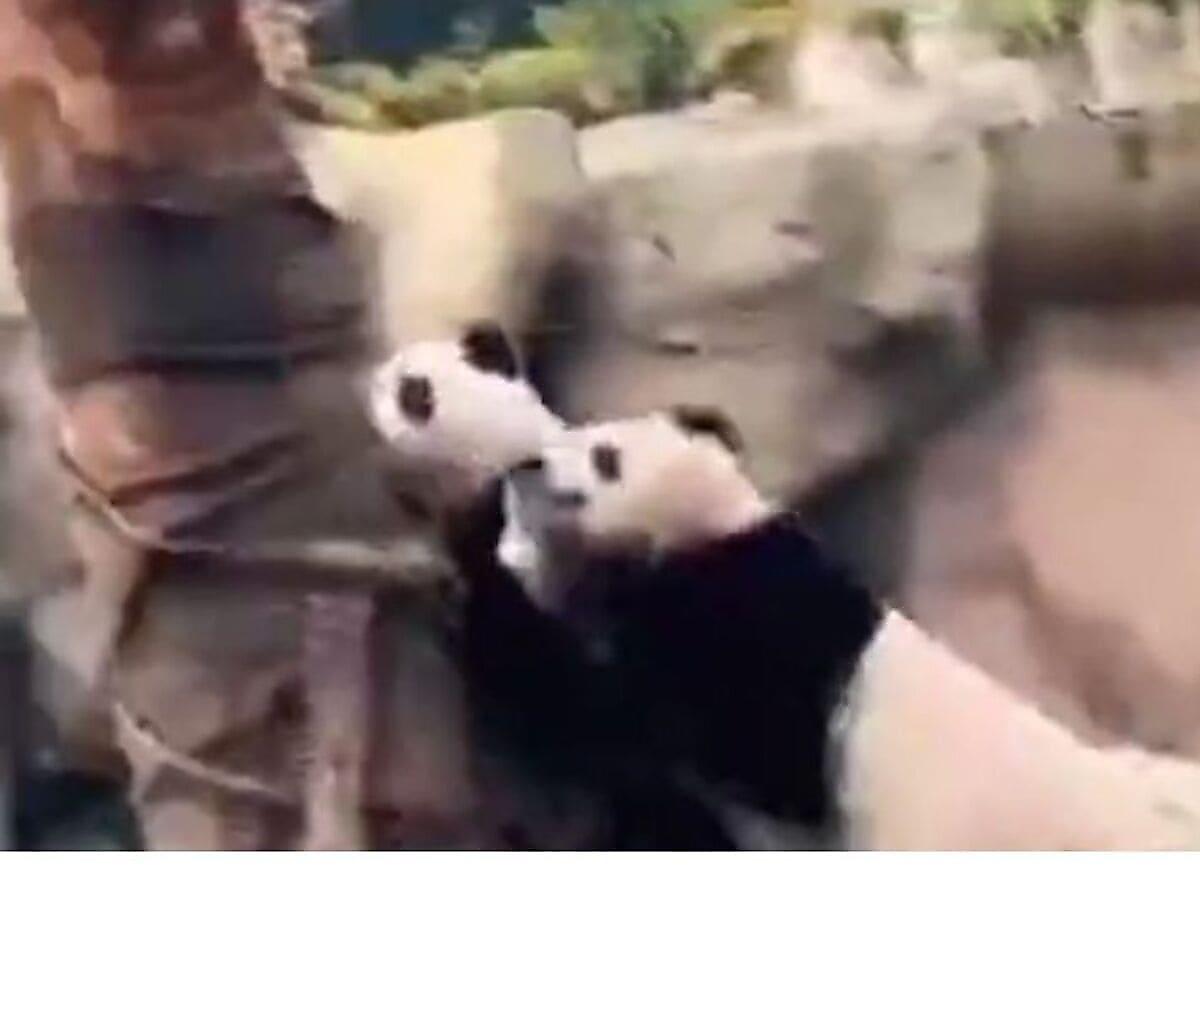 Панды, почувствовавшие землетрясение, забрались на дерево в Китае